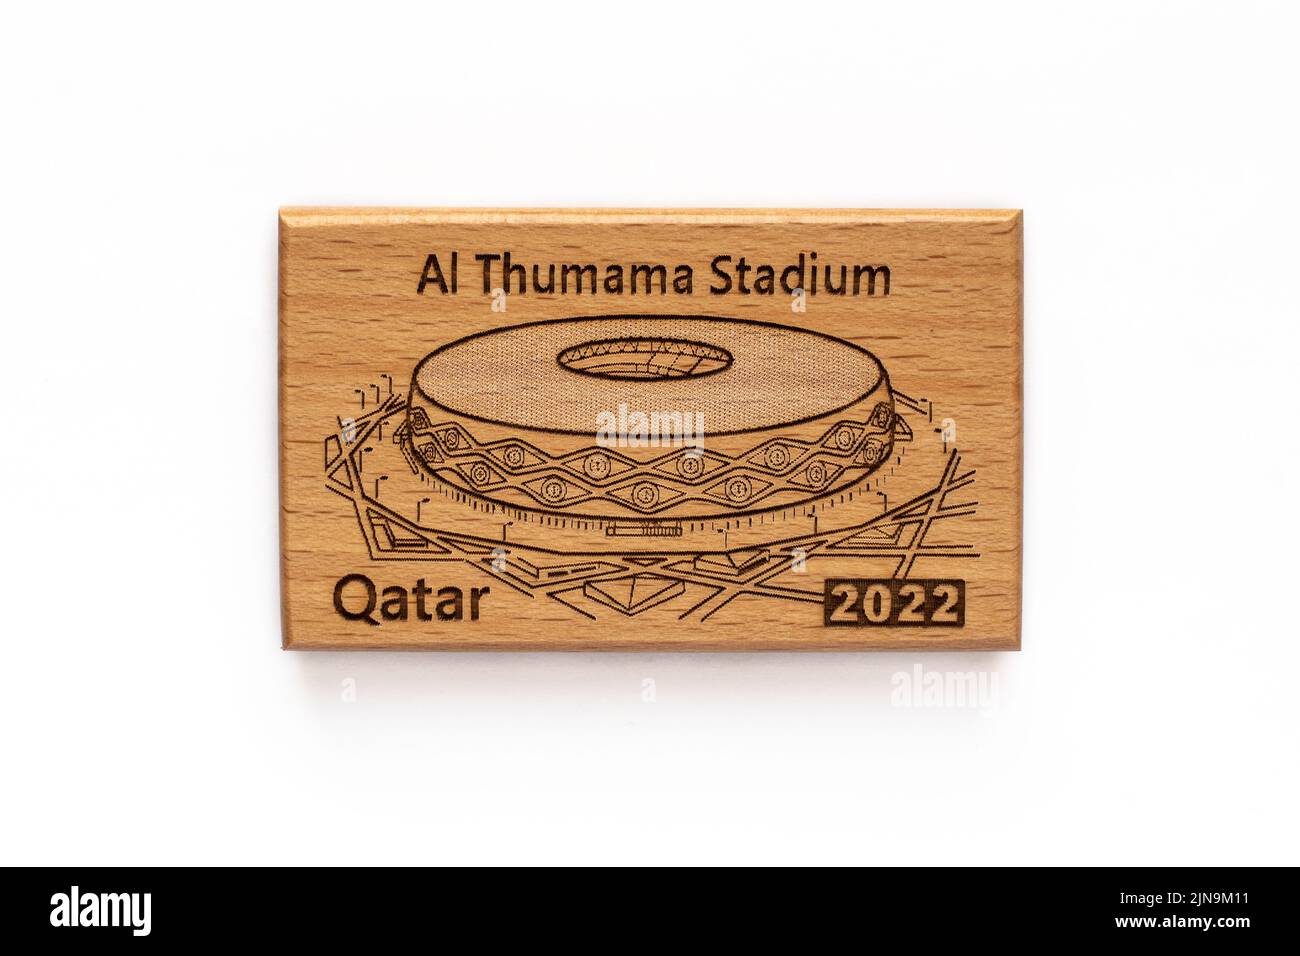 DOHA, QATAR - AUGUST 10, 2022: Al Thumama Stadium Qatar fridge magnet. Qatar will be hosting FIFA World Cup 2022. Stock Photo